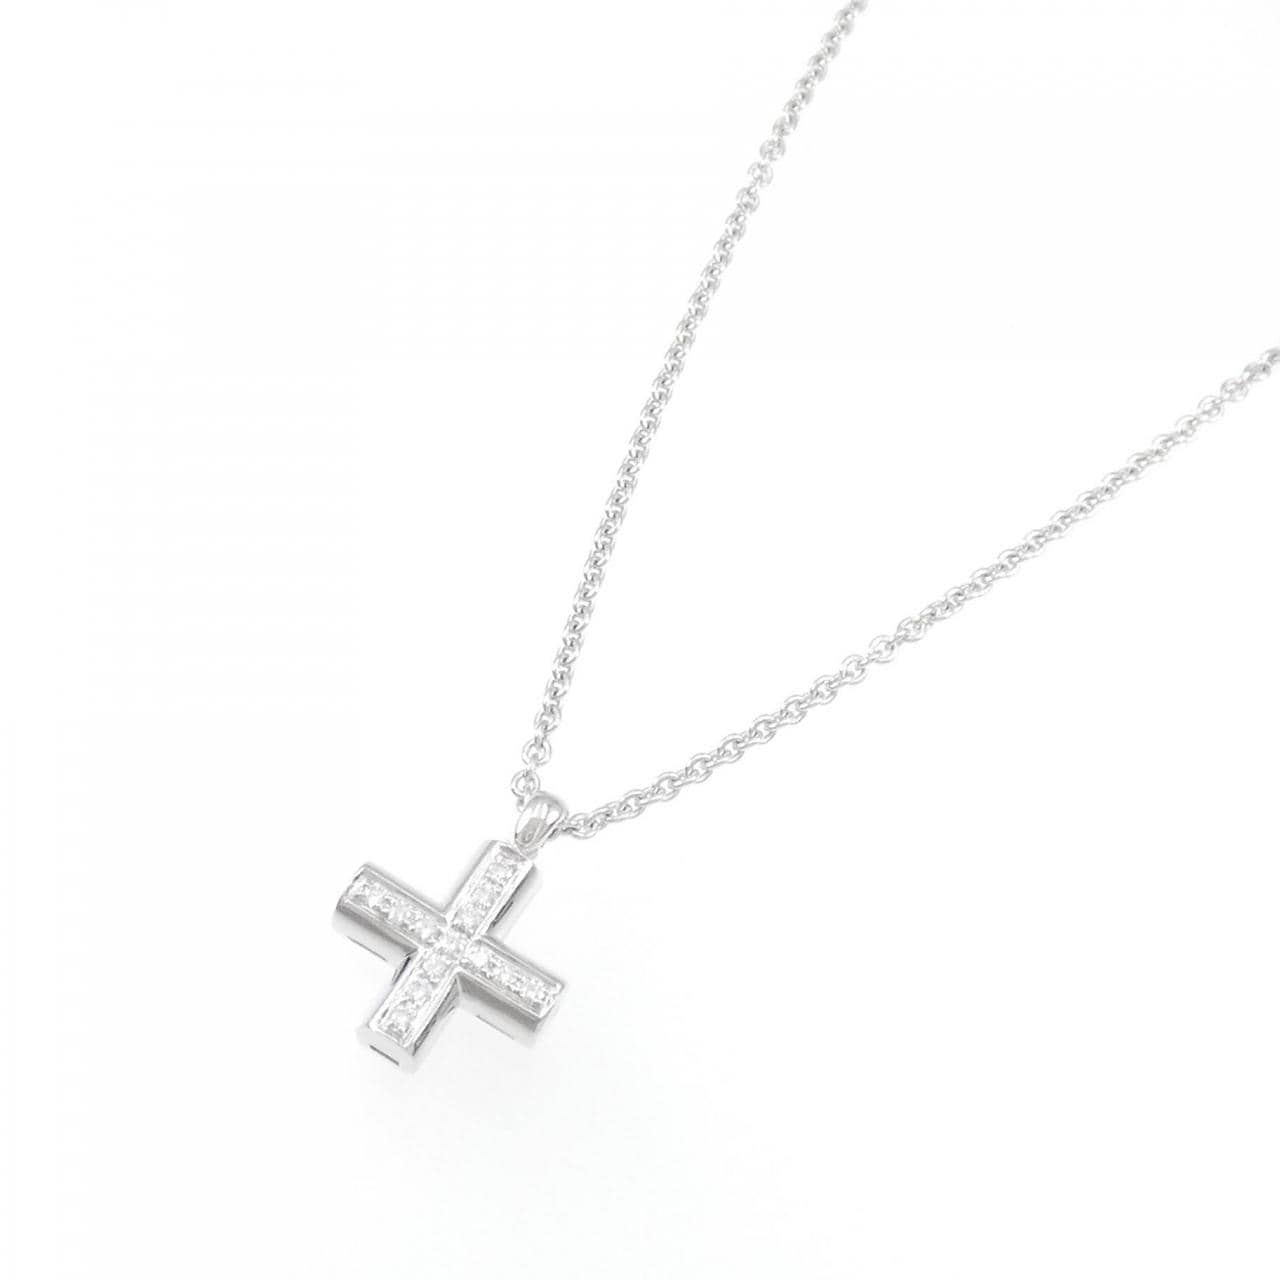 BVLGARI Greek cross necklace